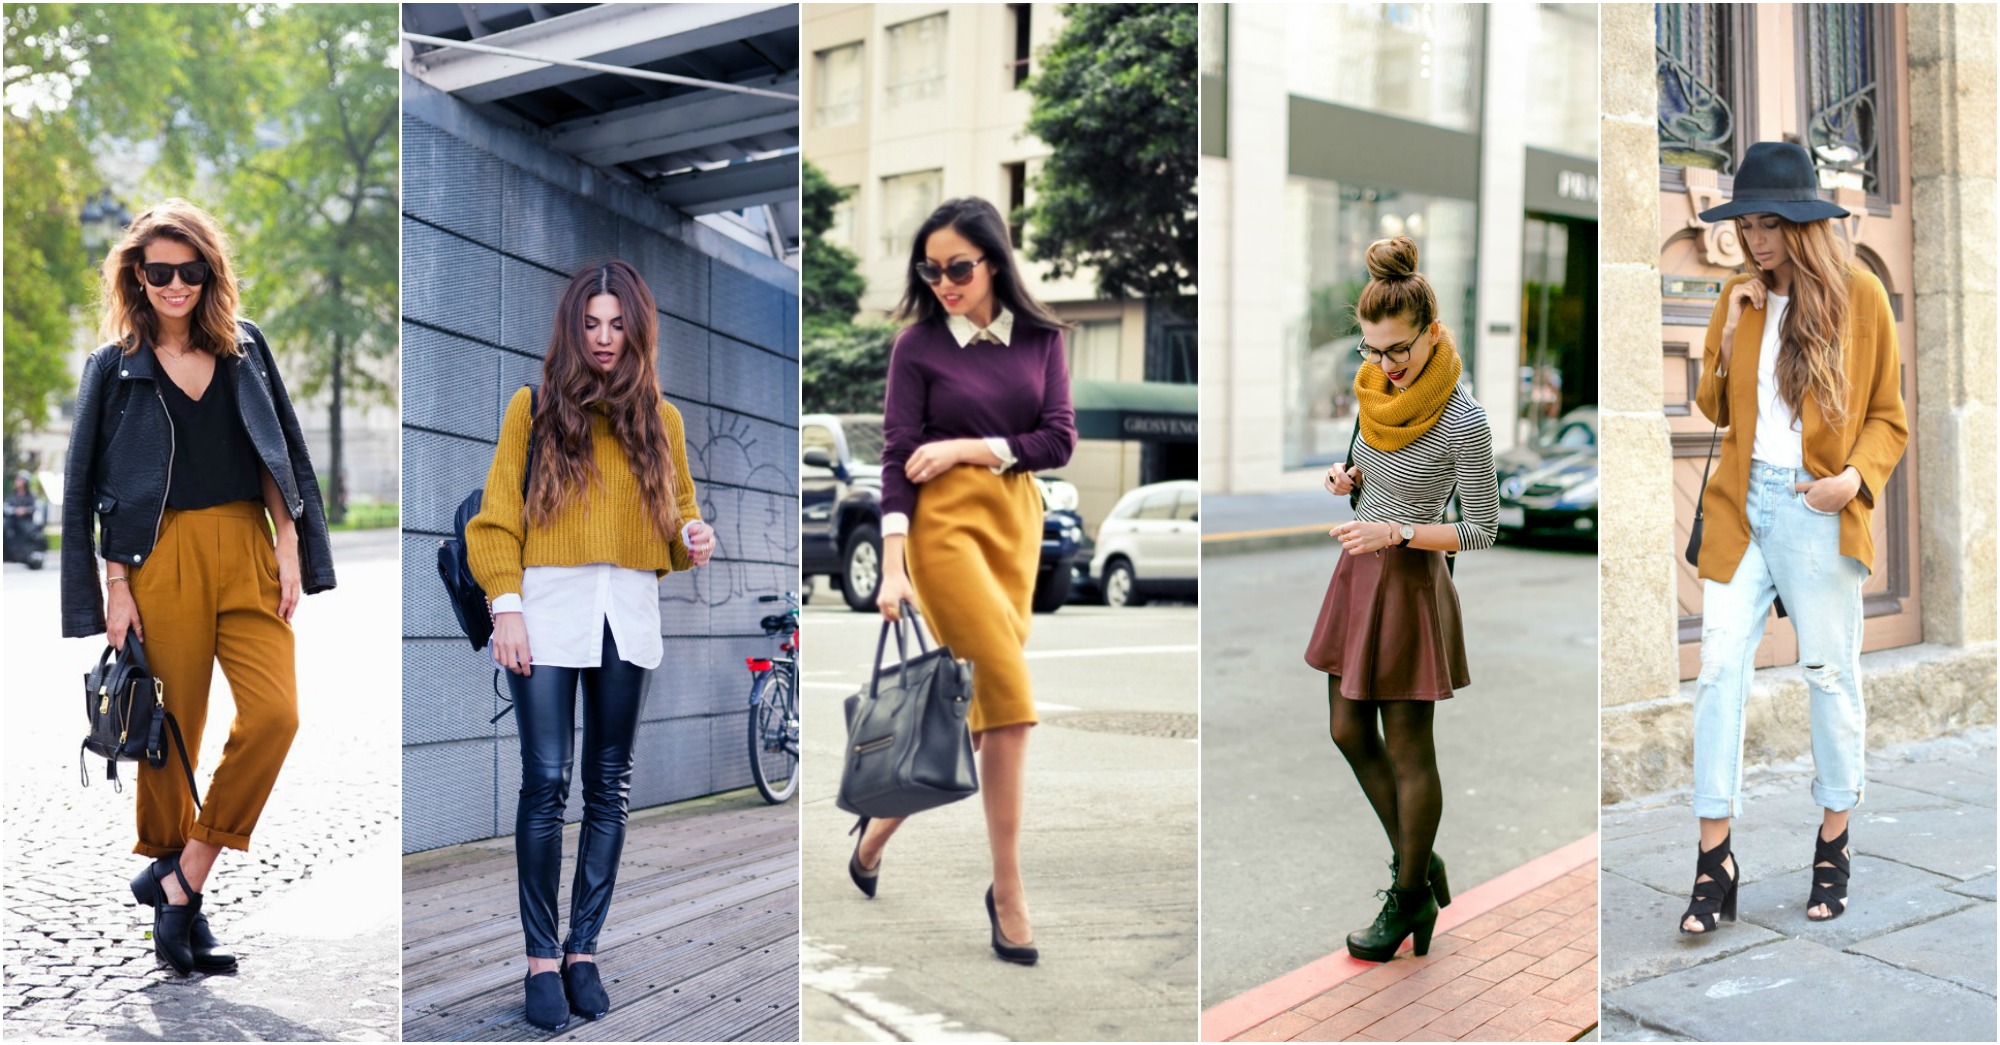 5 Fabulous Ways To Wear Mustard This Fall - fashionsy.com